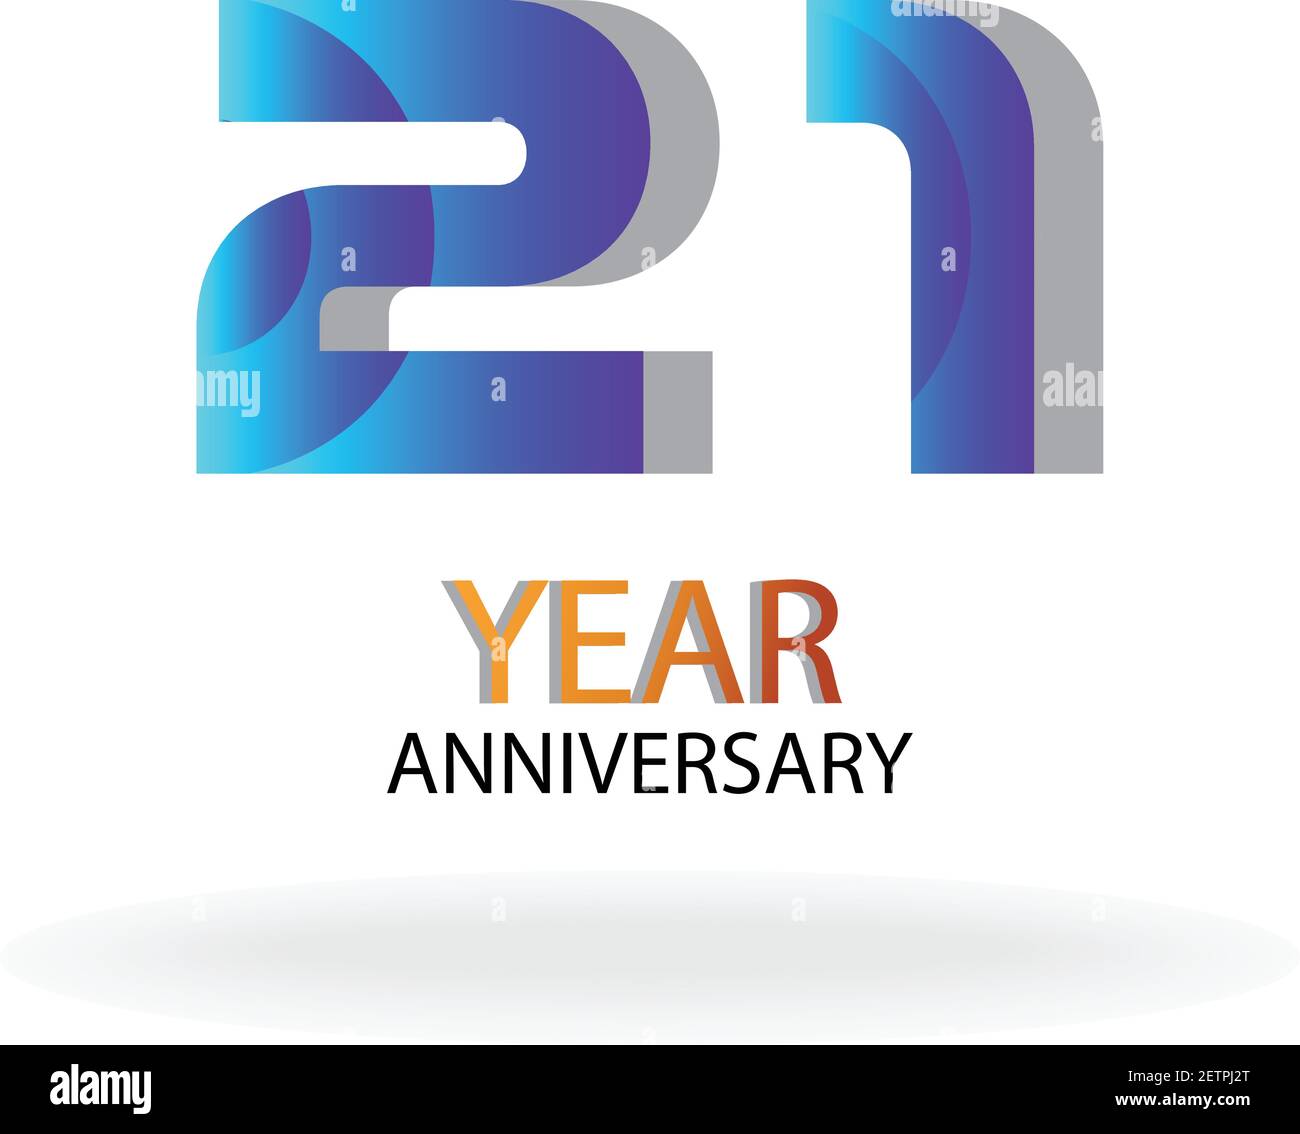 21 Year Anniversary Vector Template Design Illustration Blue Elegant White Background Stock Vector